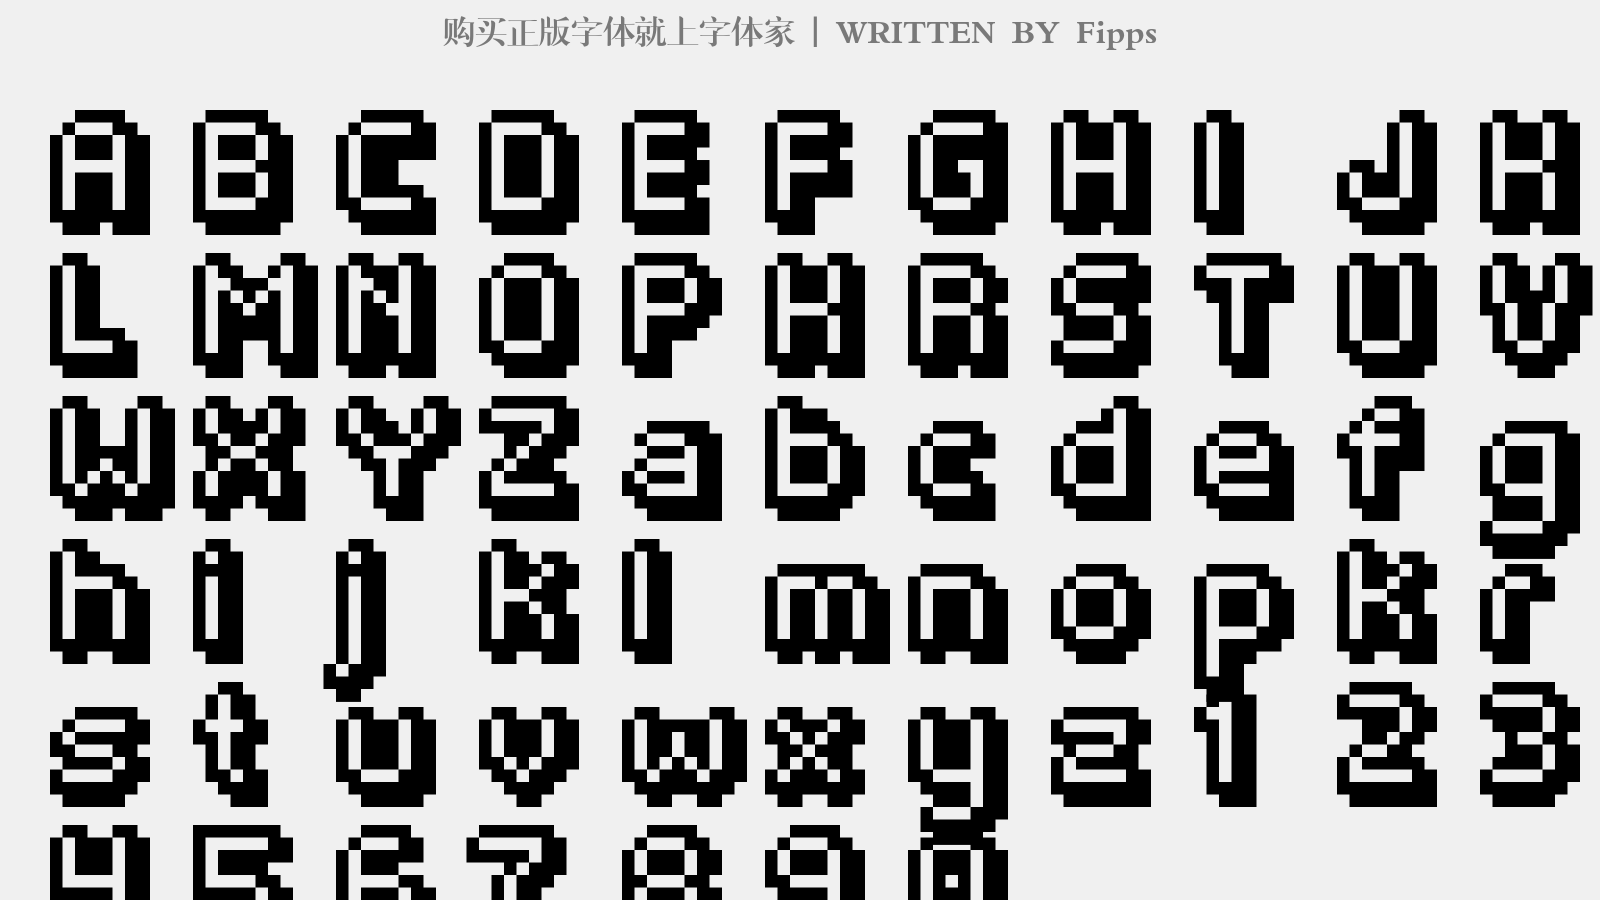 Fipps - 大写字母/小写字母/数字